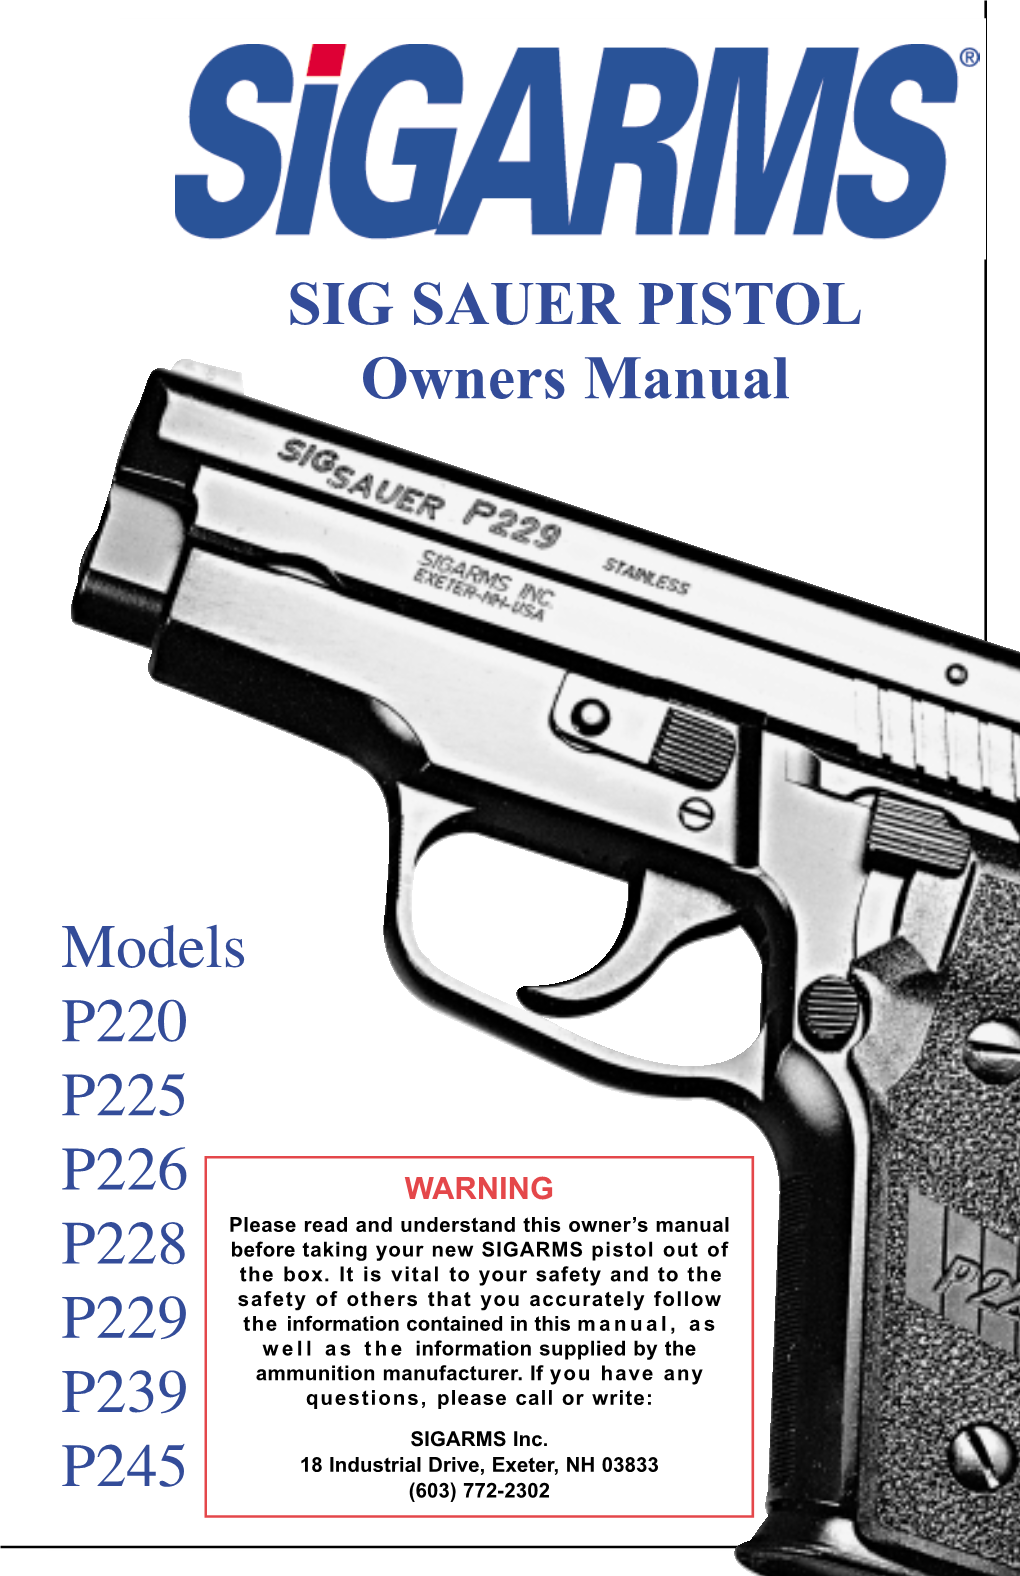 SIG SAUER PISTOL Owners Manual Models P220 P225 P226 P228